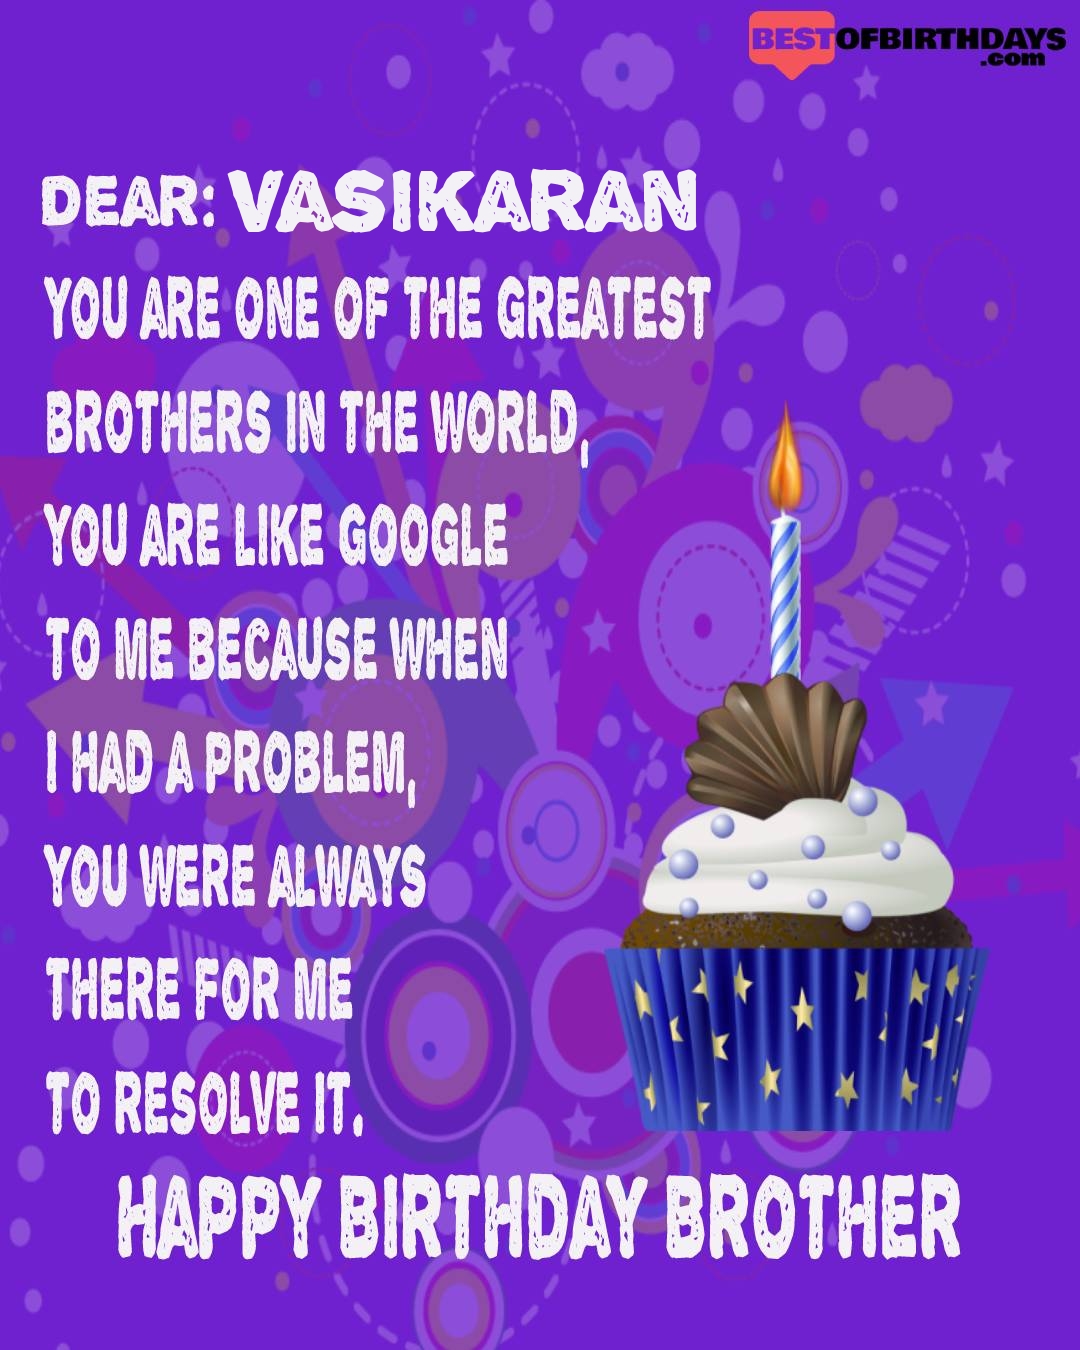 Happy birthday vasikaran bhai brother bro